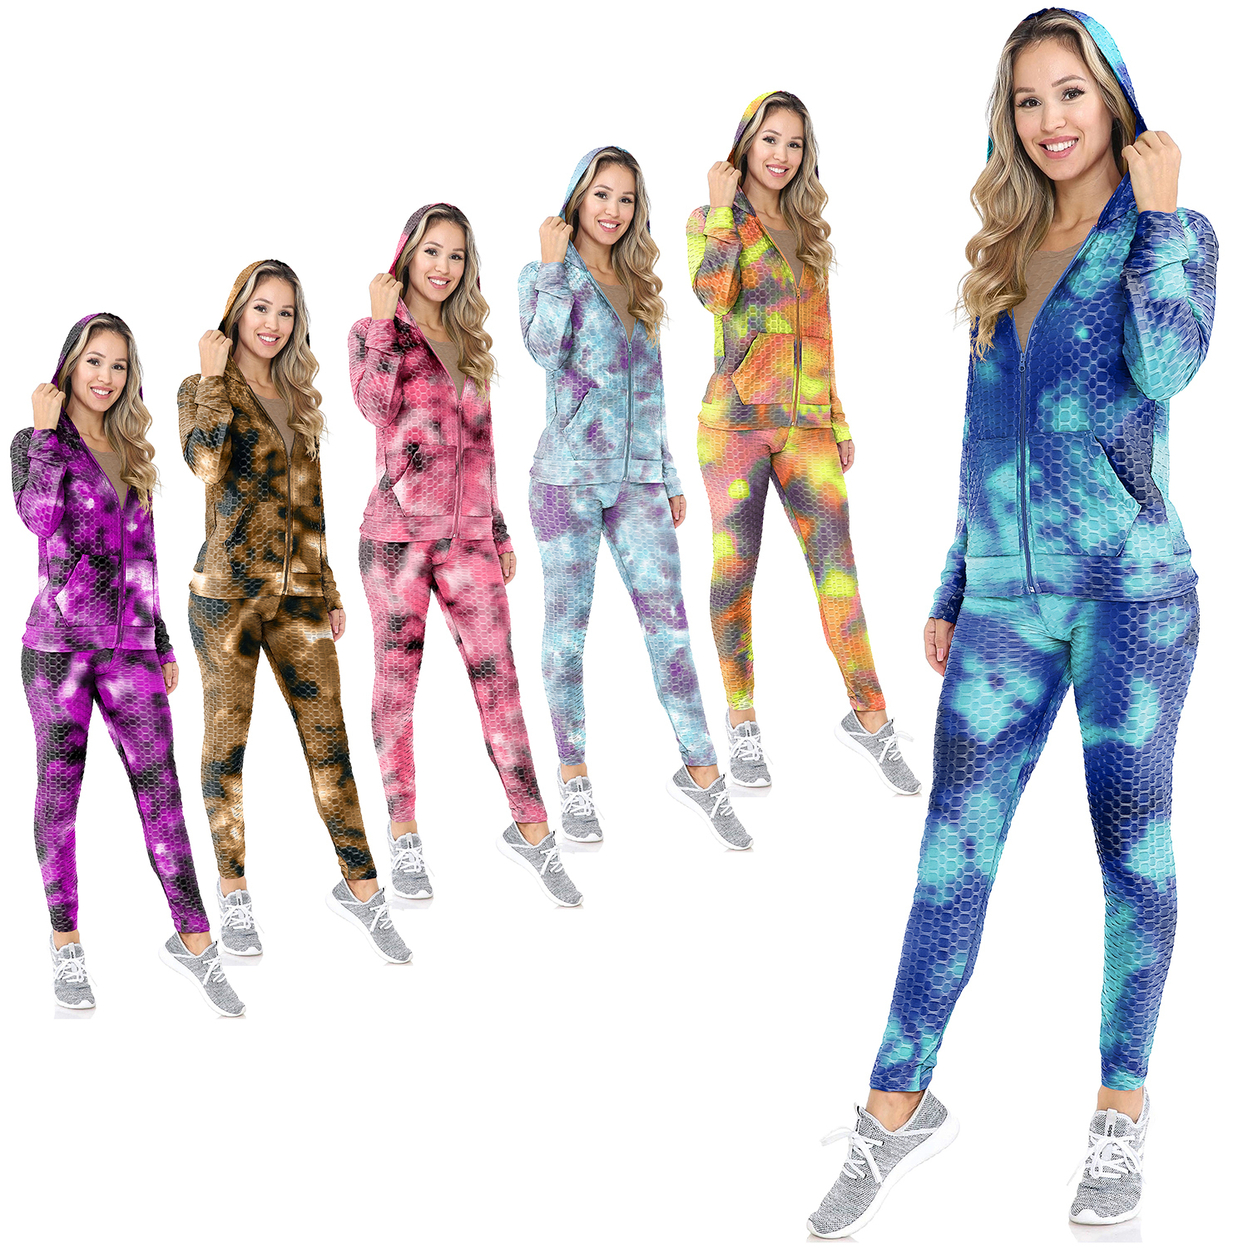 2-Set: Women's Athletic Anti-Cellulite Textured Tie Dye Body Contour Yoga Track Suit W/ Hood - Large, Tie Dye